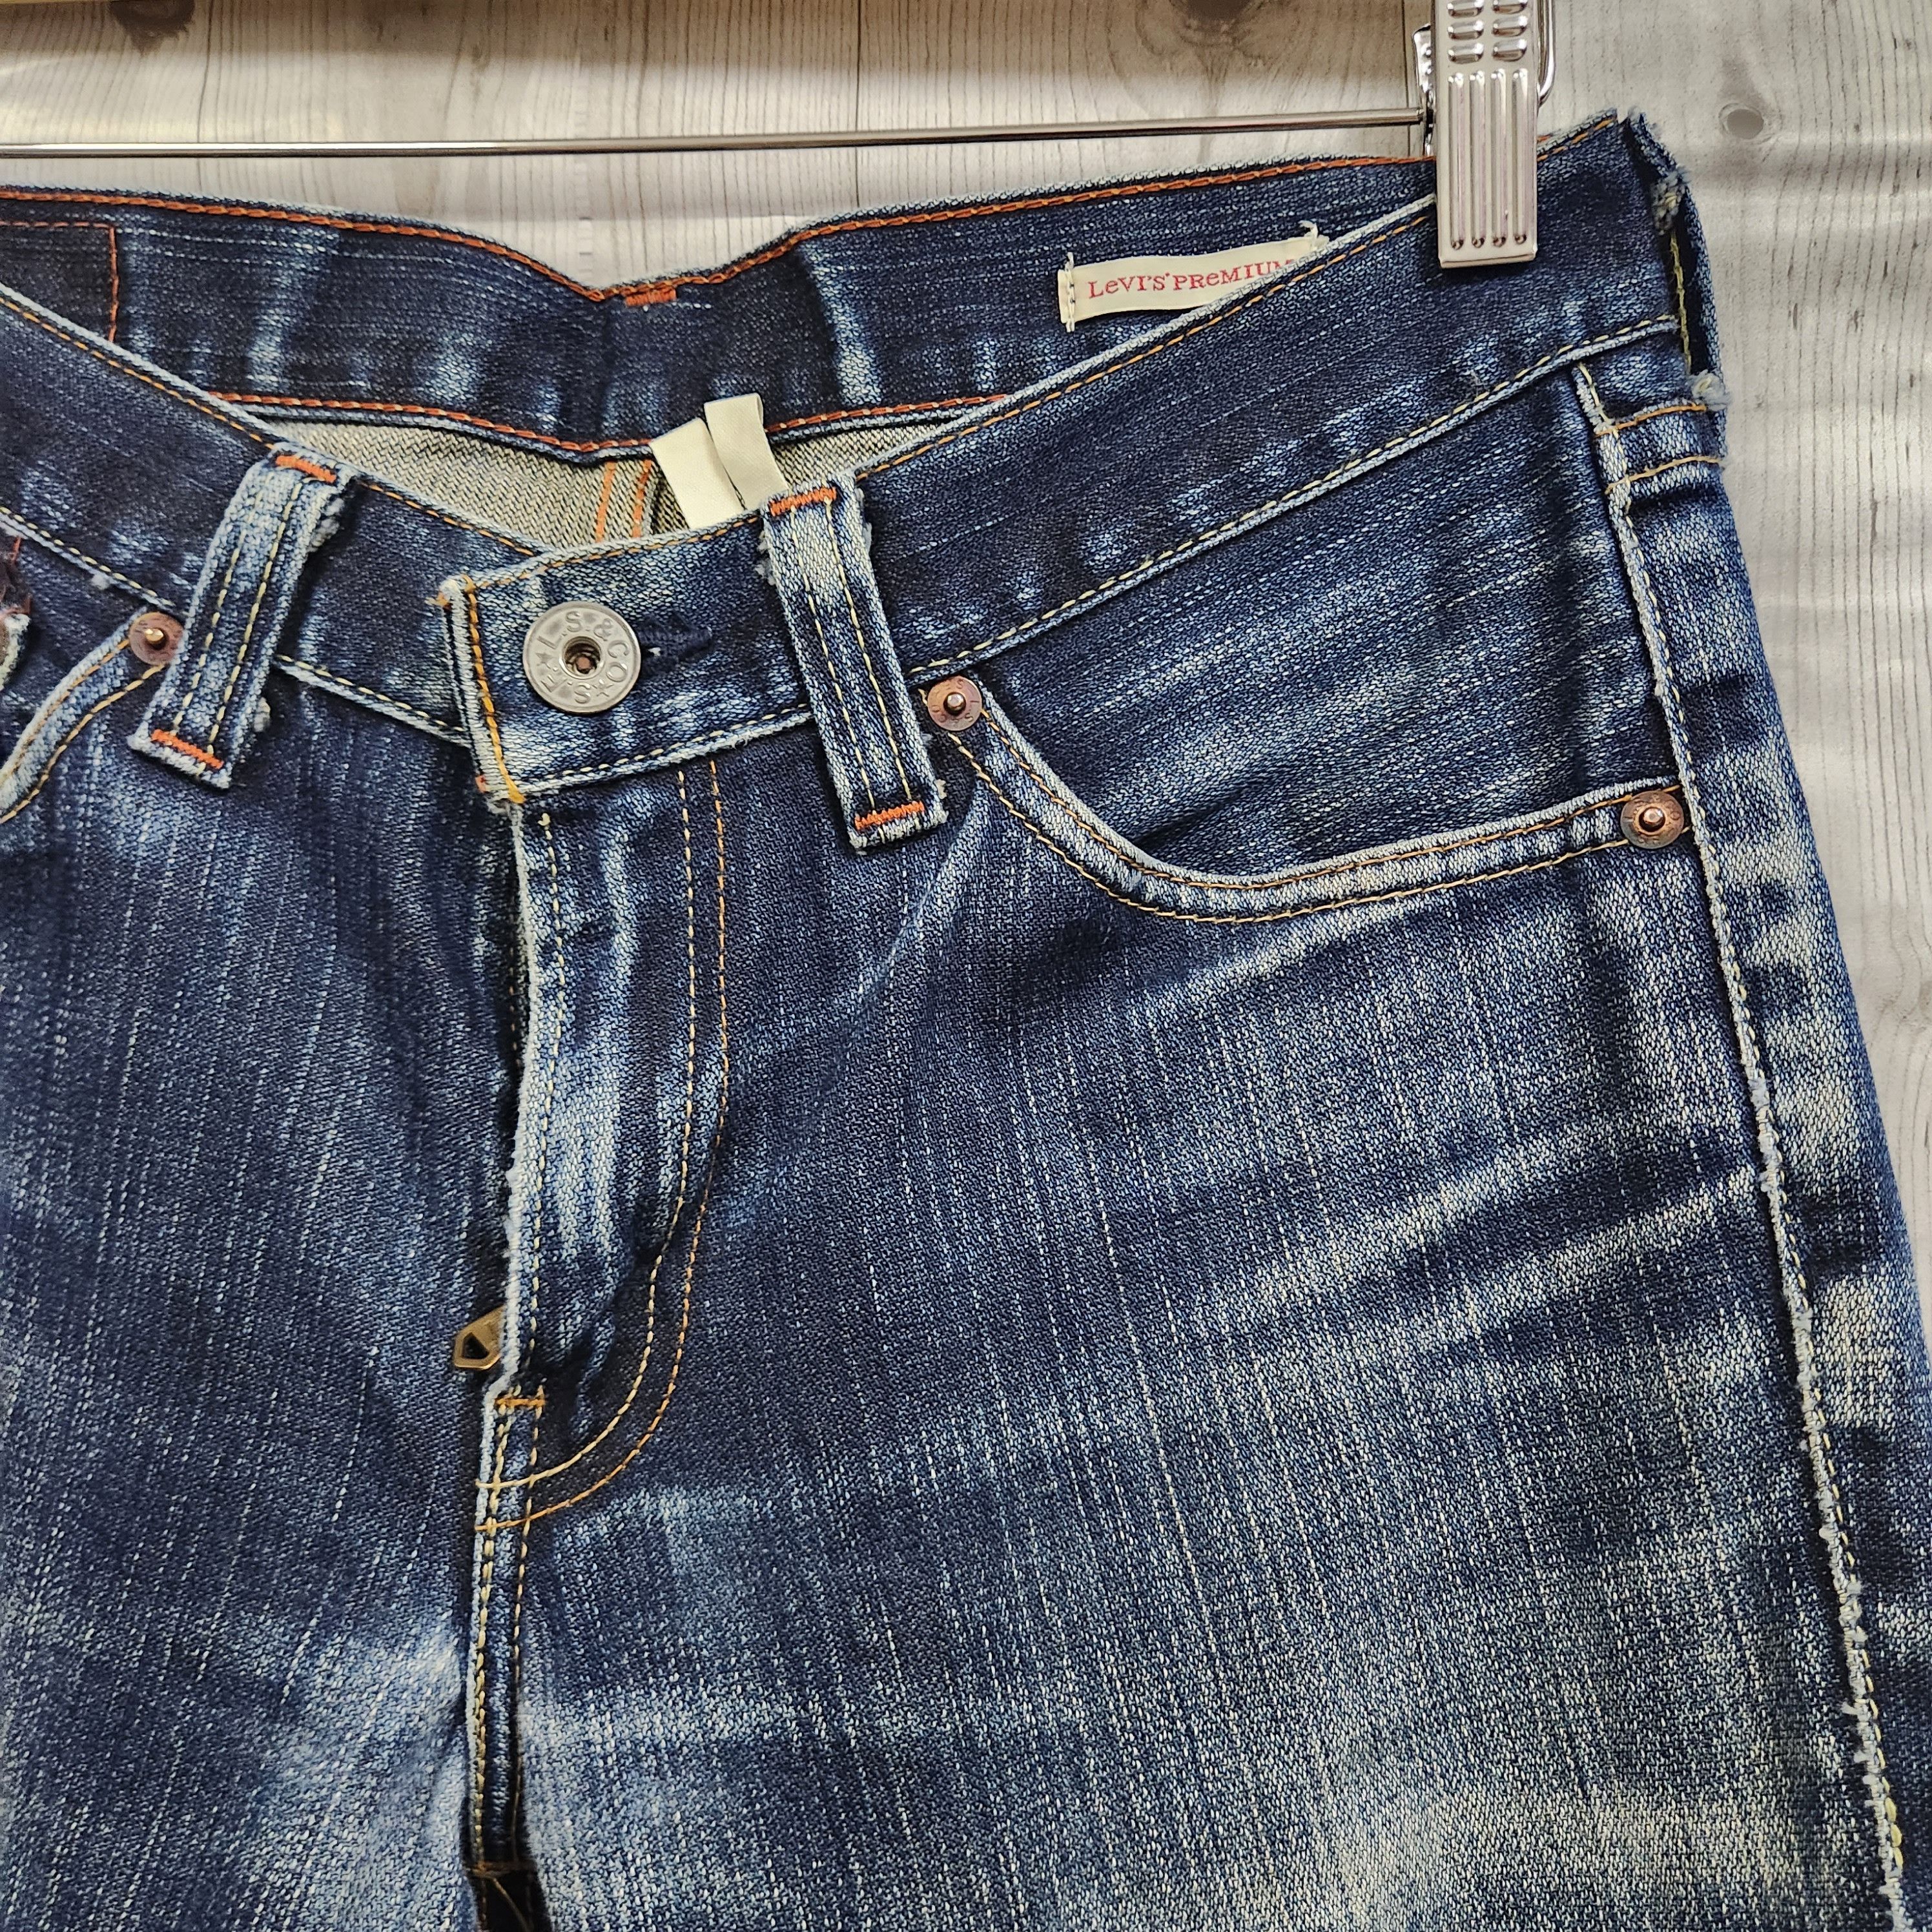 Vintage Levis 517 Premium Denim Jeans Year 2006 - 19